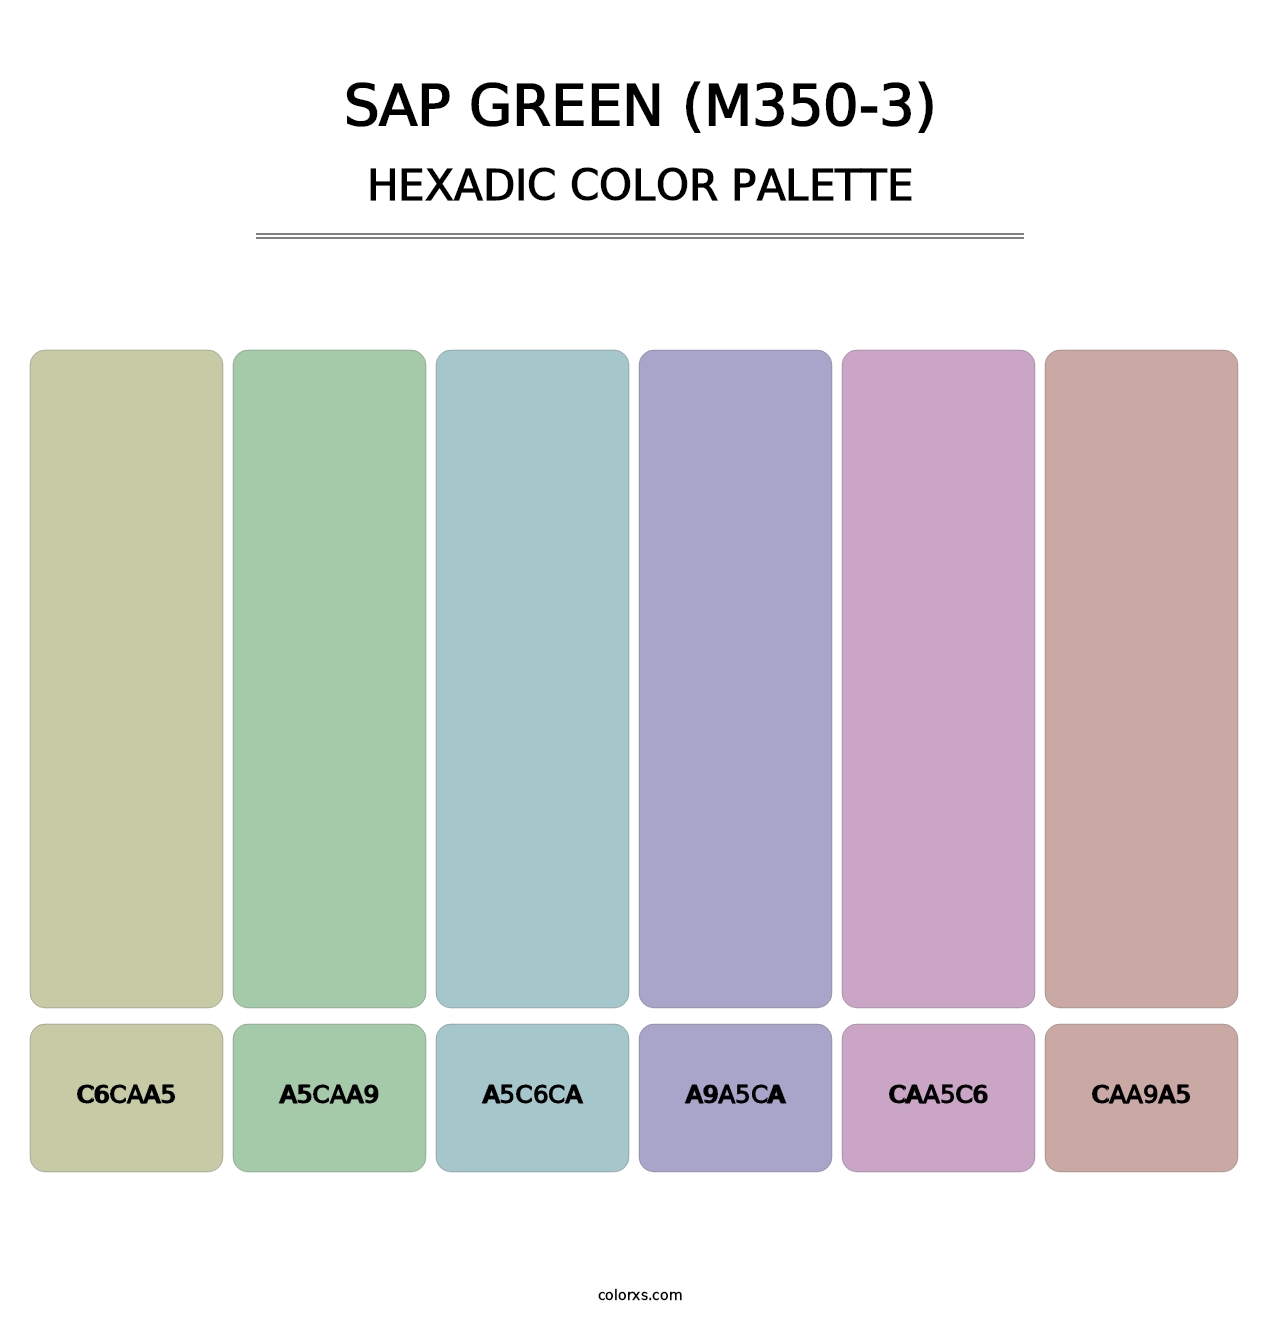 Sap Green (M350-3) - Hexadic Color Palette